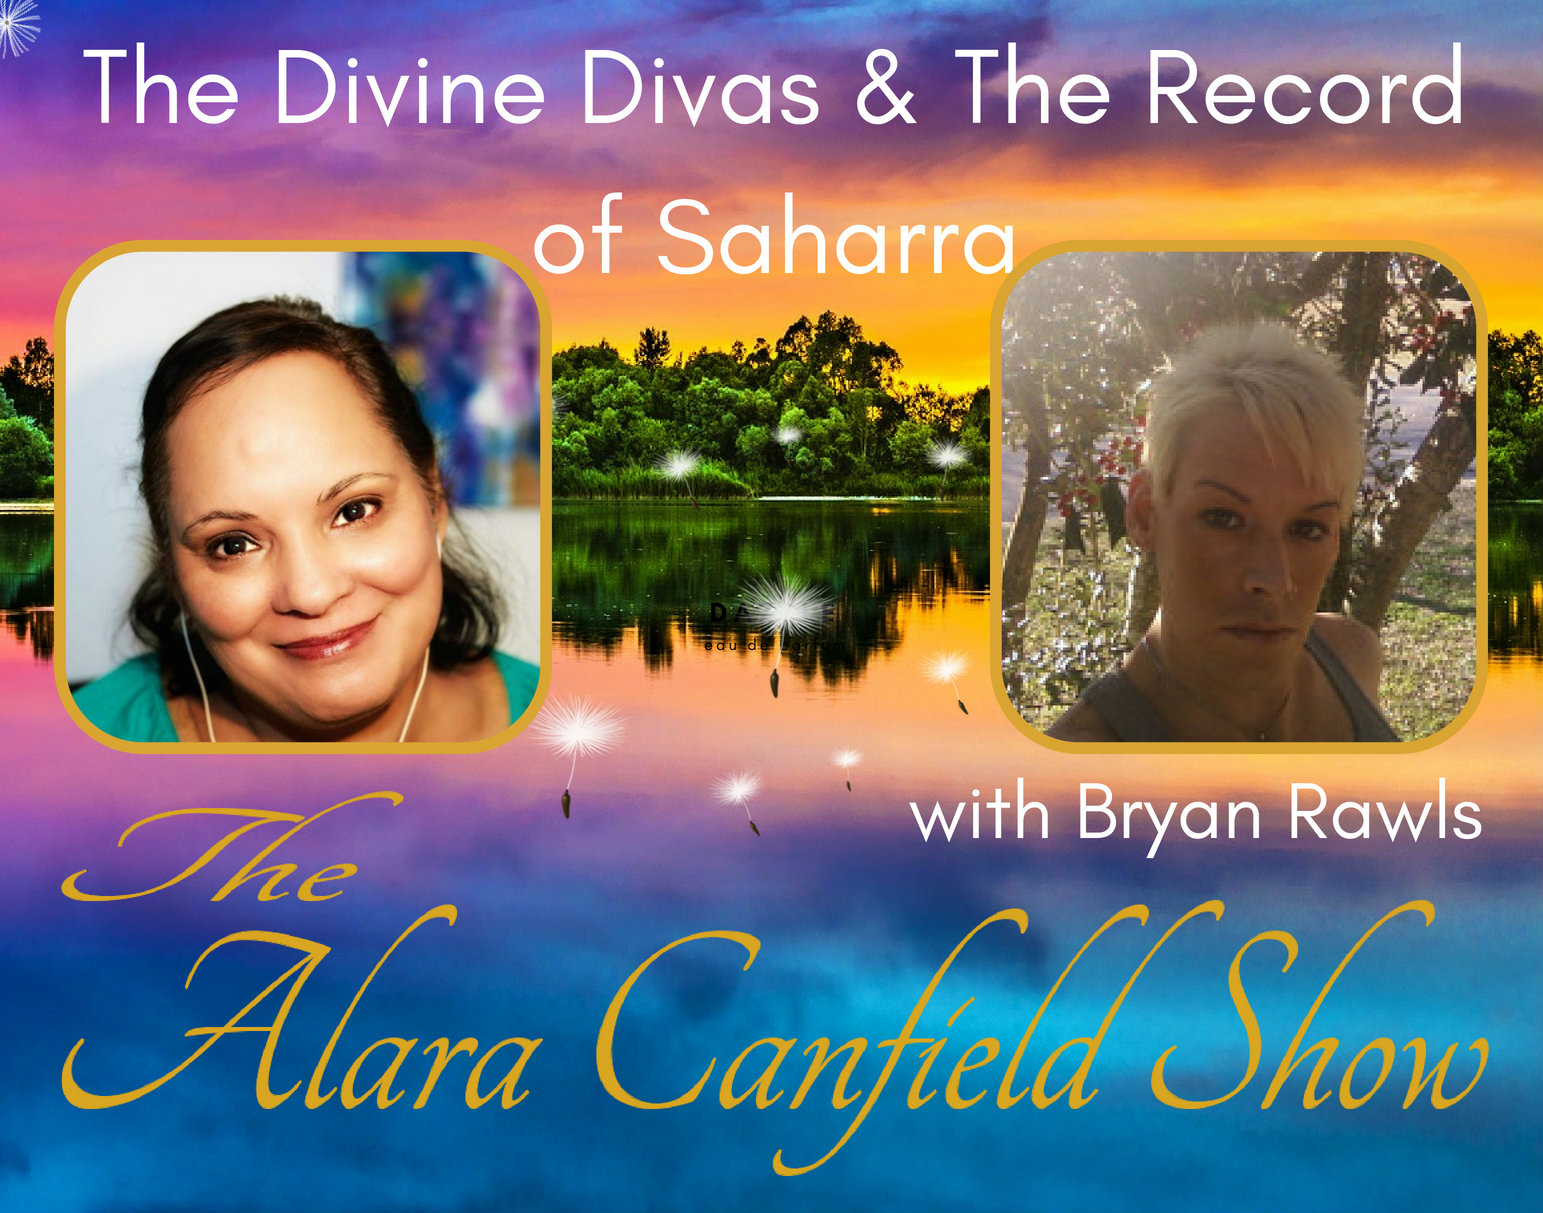 The Divine Divas & The Record of Saharra with Bryan Rawls